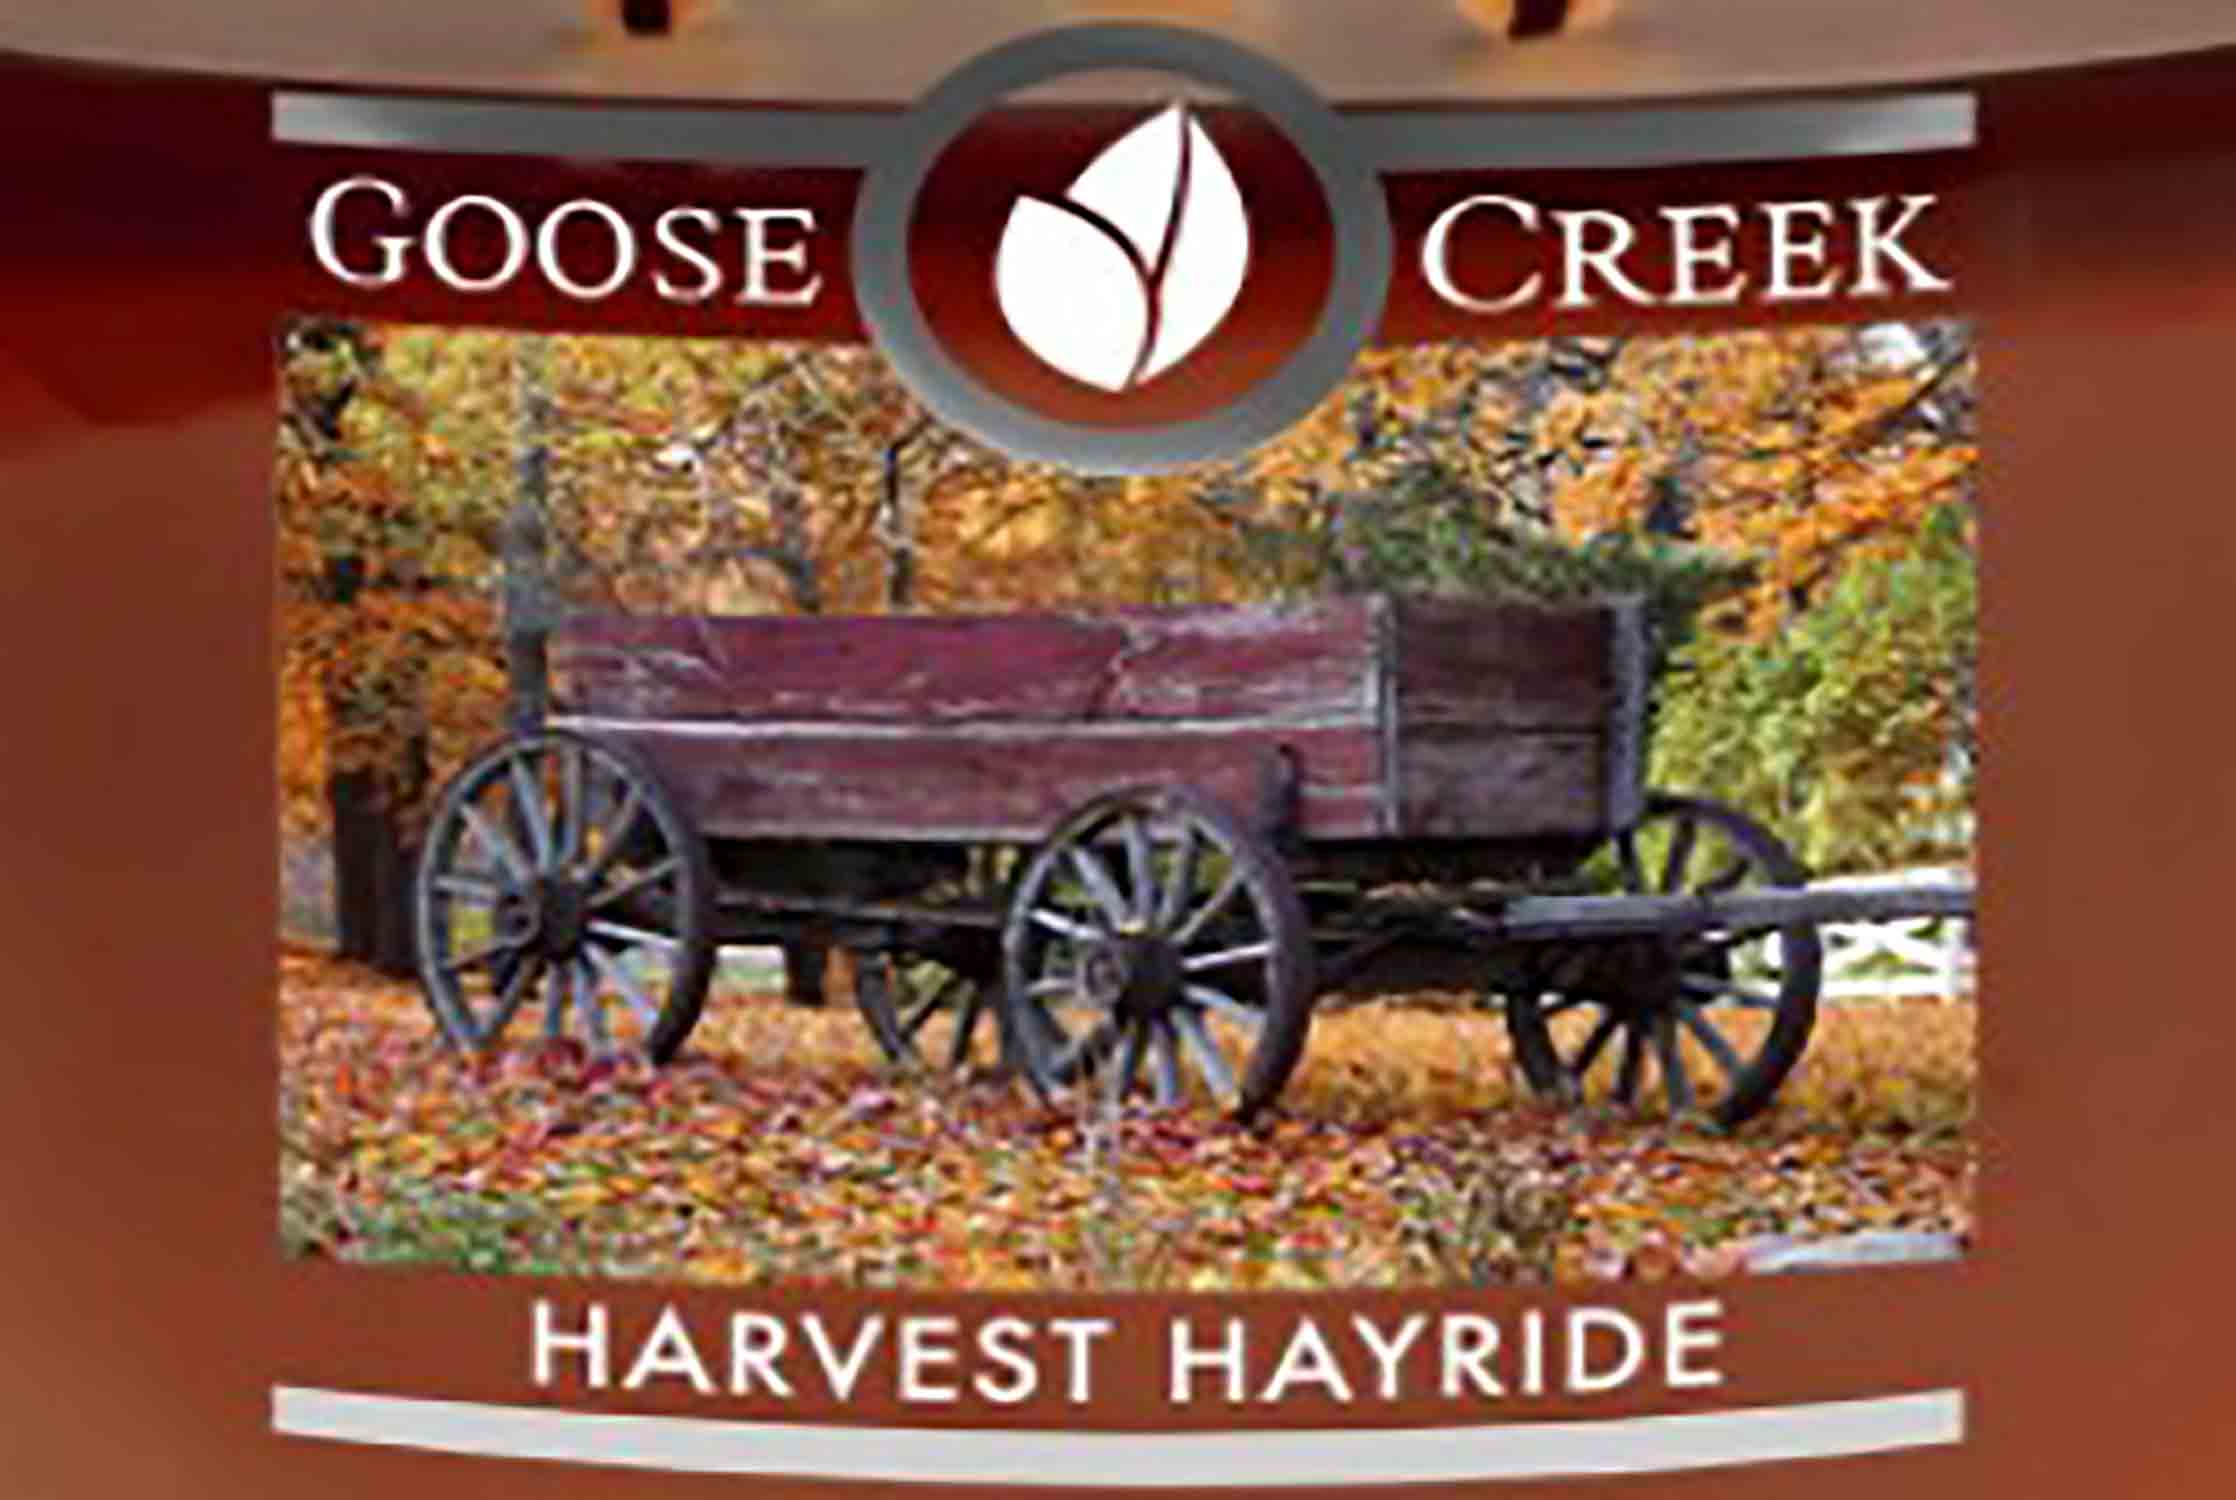 Goose Creek Harvest Hayride 22 g - Crumble vosk